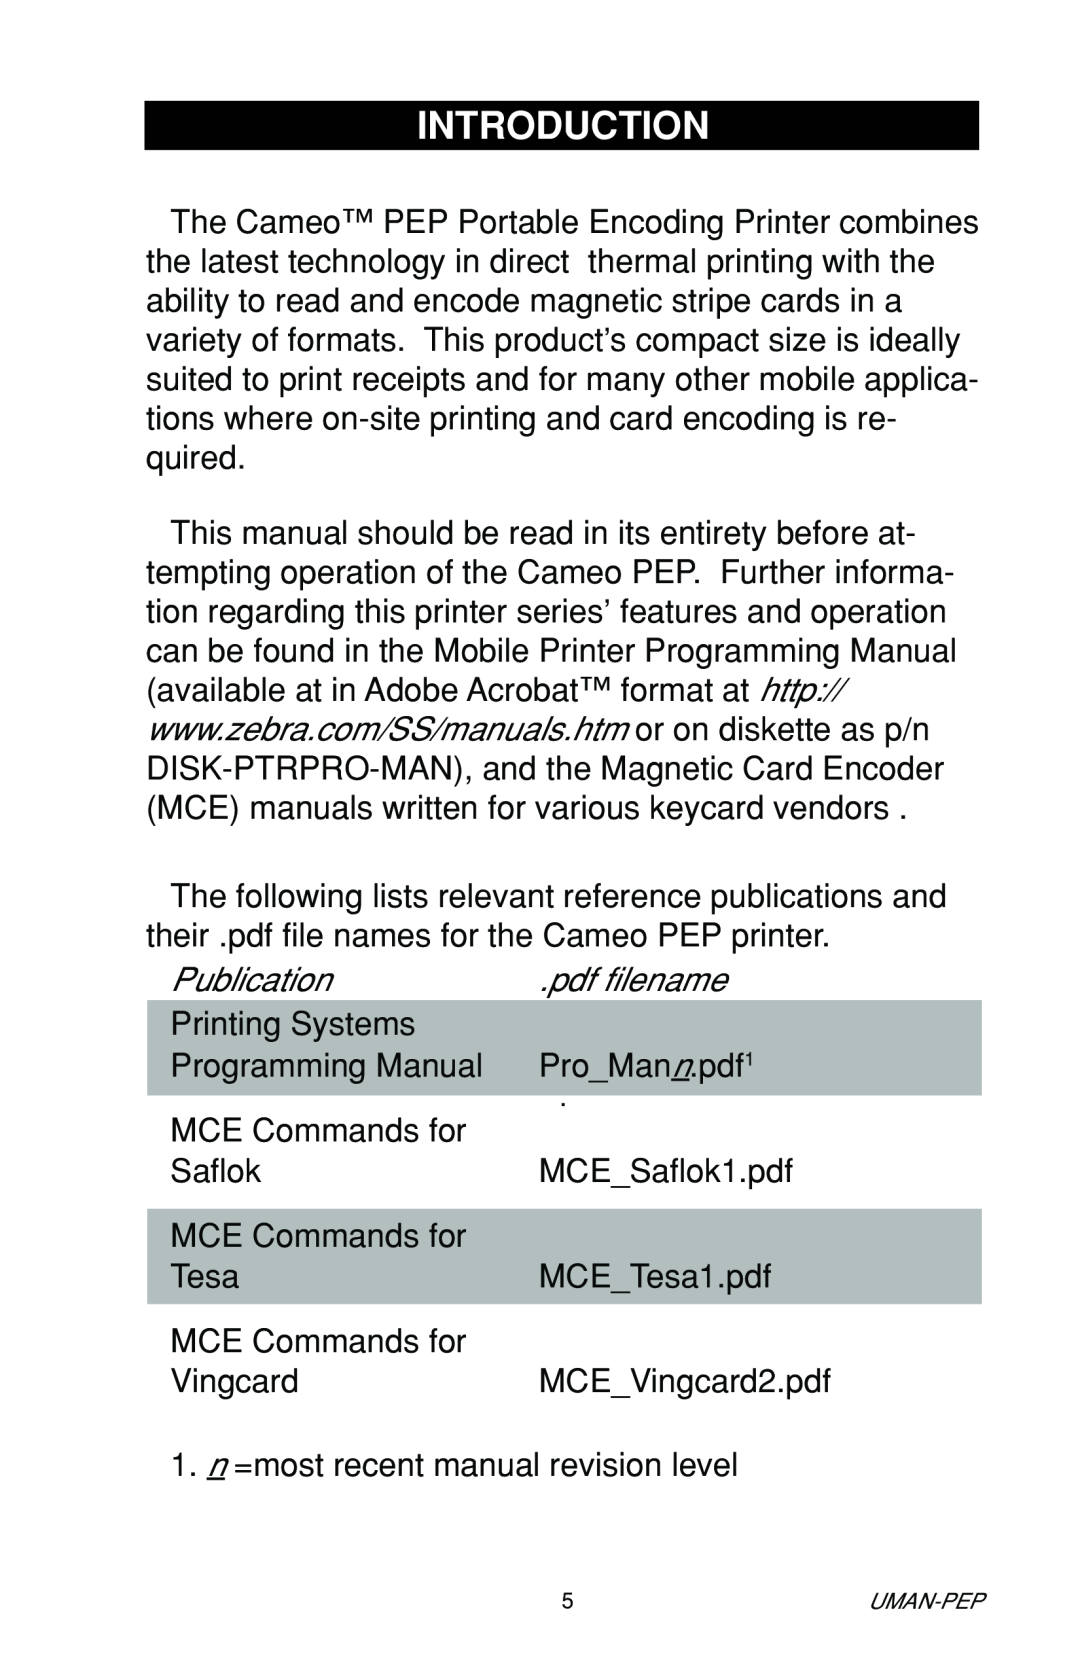 Zebra Technologies Portable Encoding Printer user manual Introduction, Publication.pdf filename 